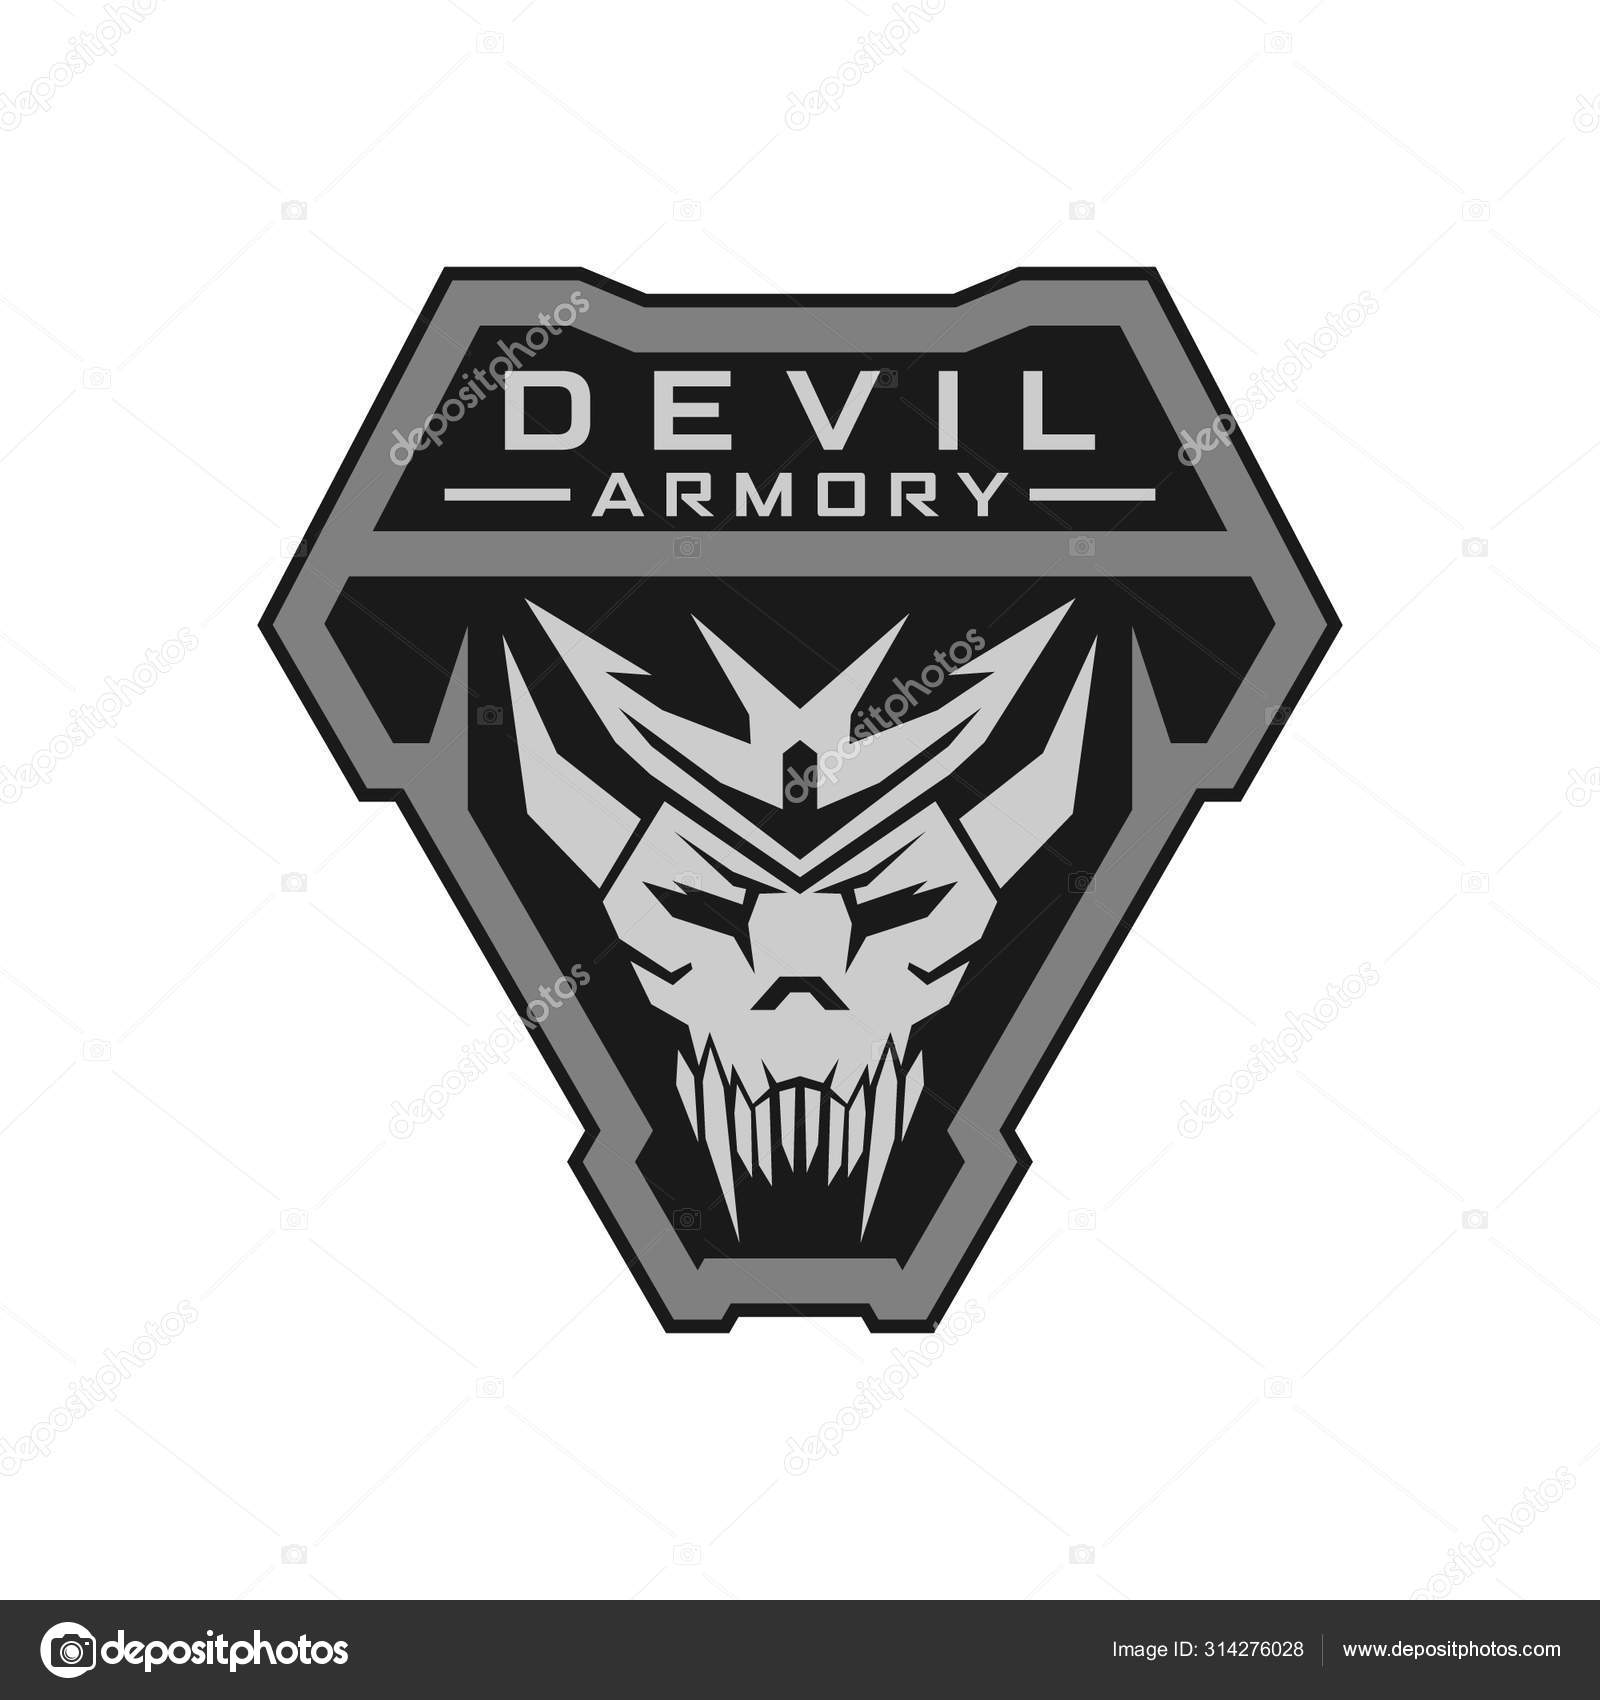 https://st4.depositphotos.com/11338062/31427/v/1600/depositphotos_314276028-stock-illustration-tactical-triangle-evil-logo-design.jpg